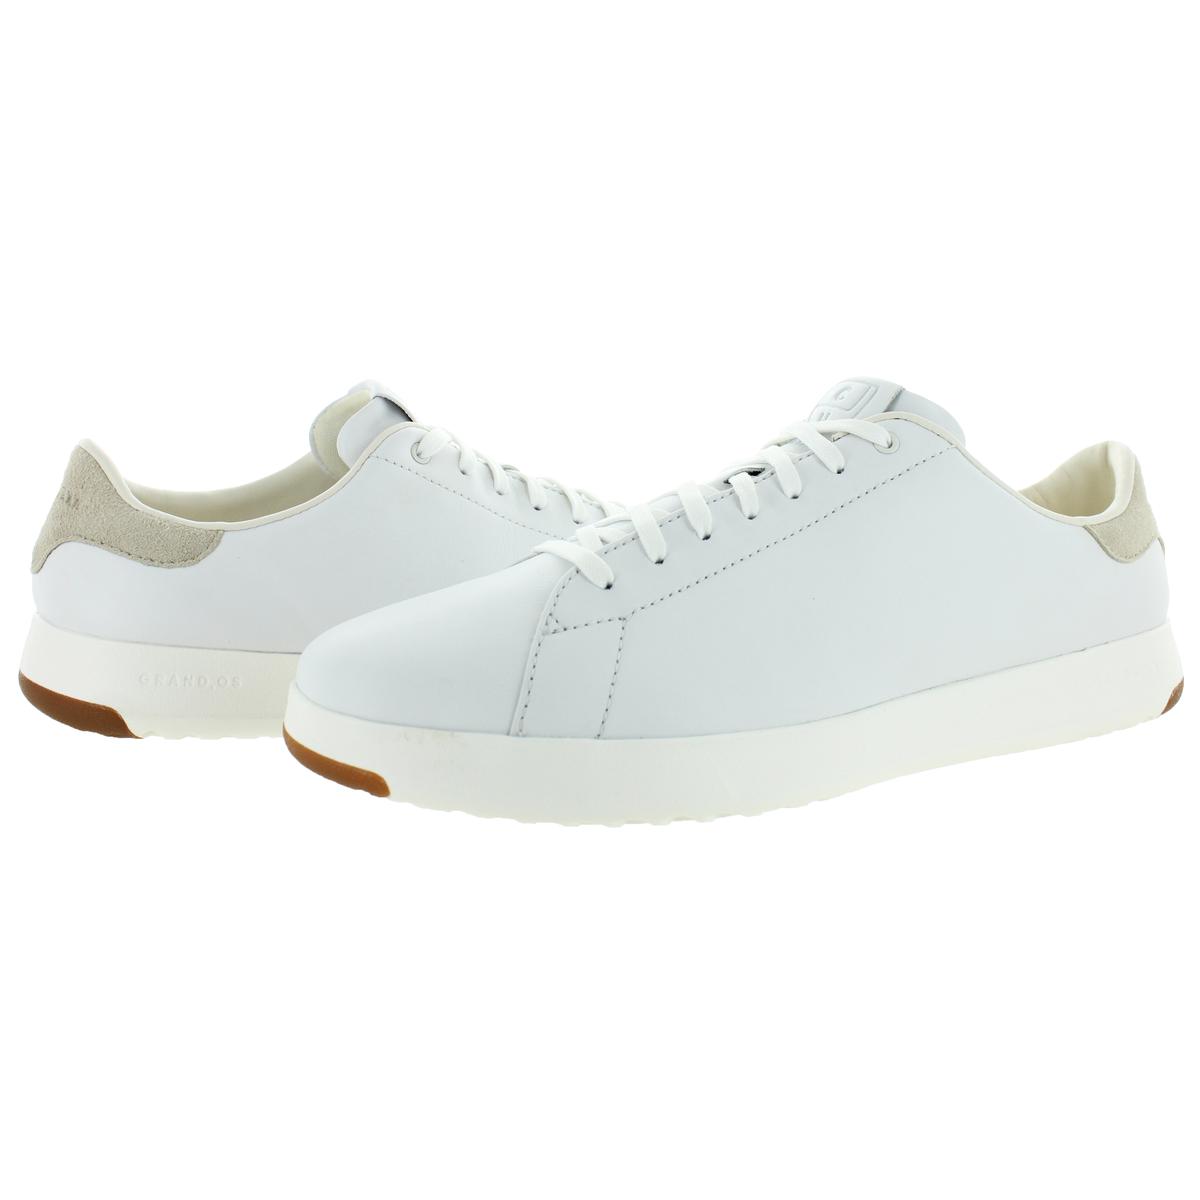 Cole Haan Mens GrandPro White Fashion Sneakers Shoes 10.5 Wide (E) BHFO ...